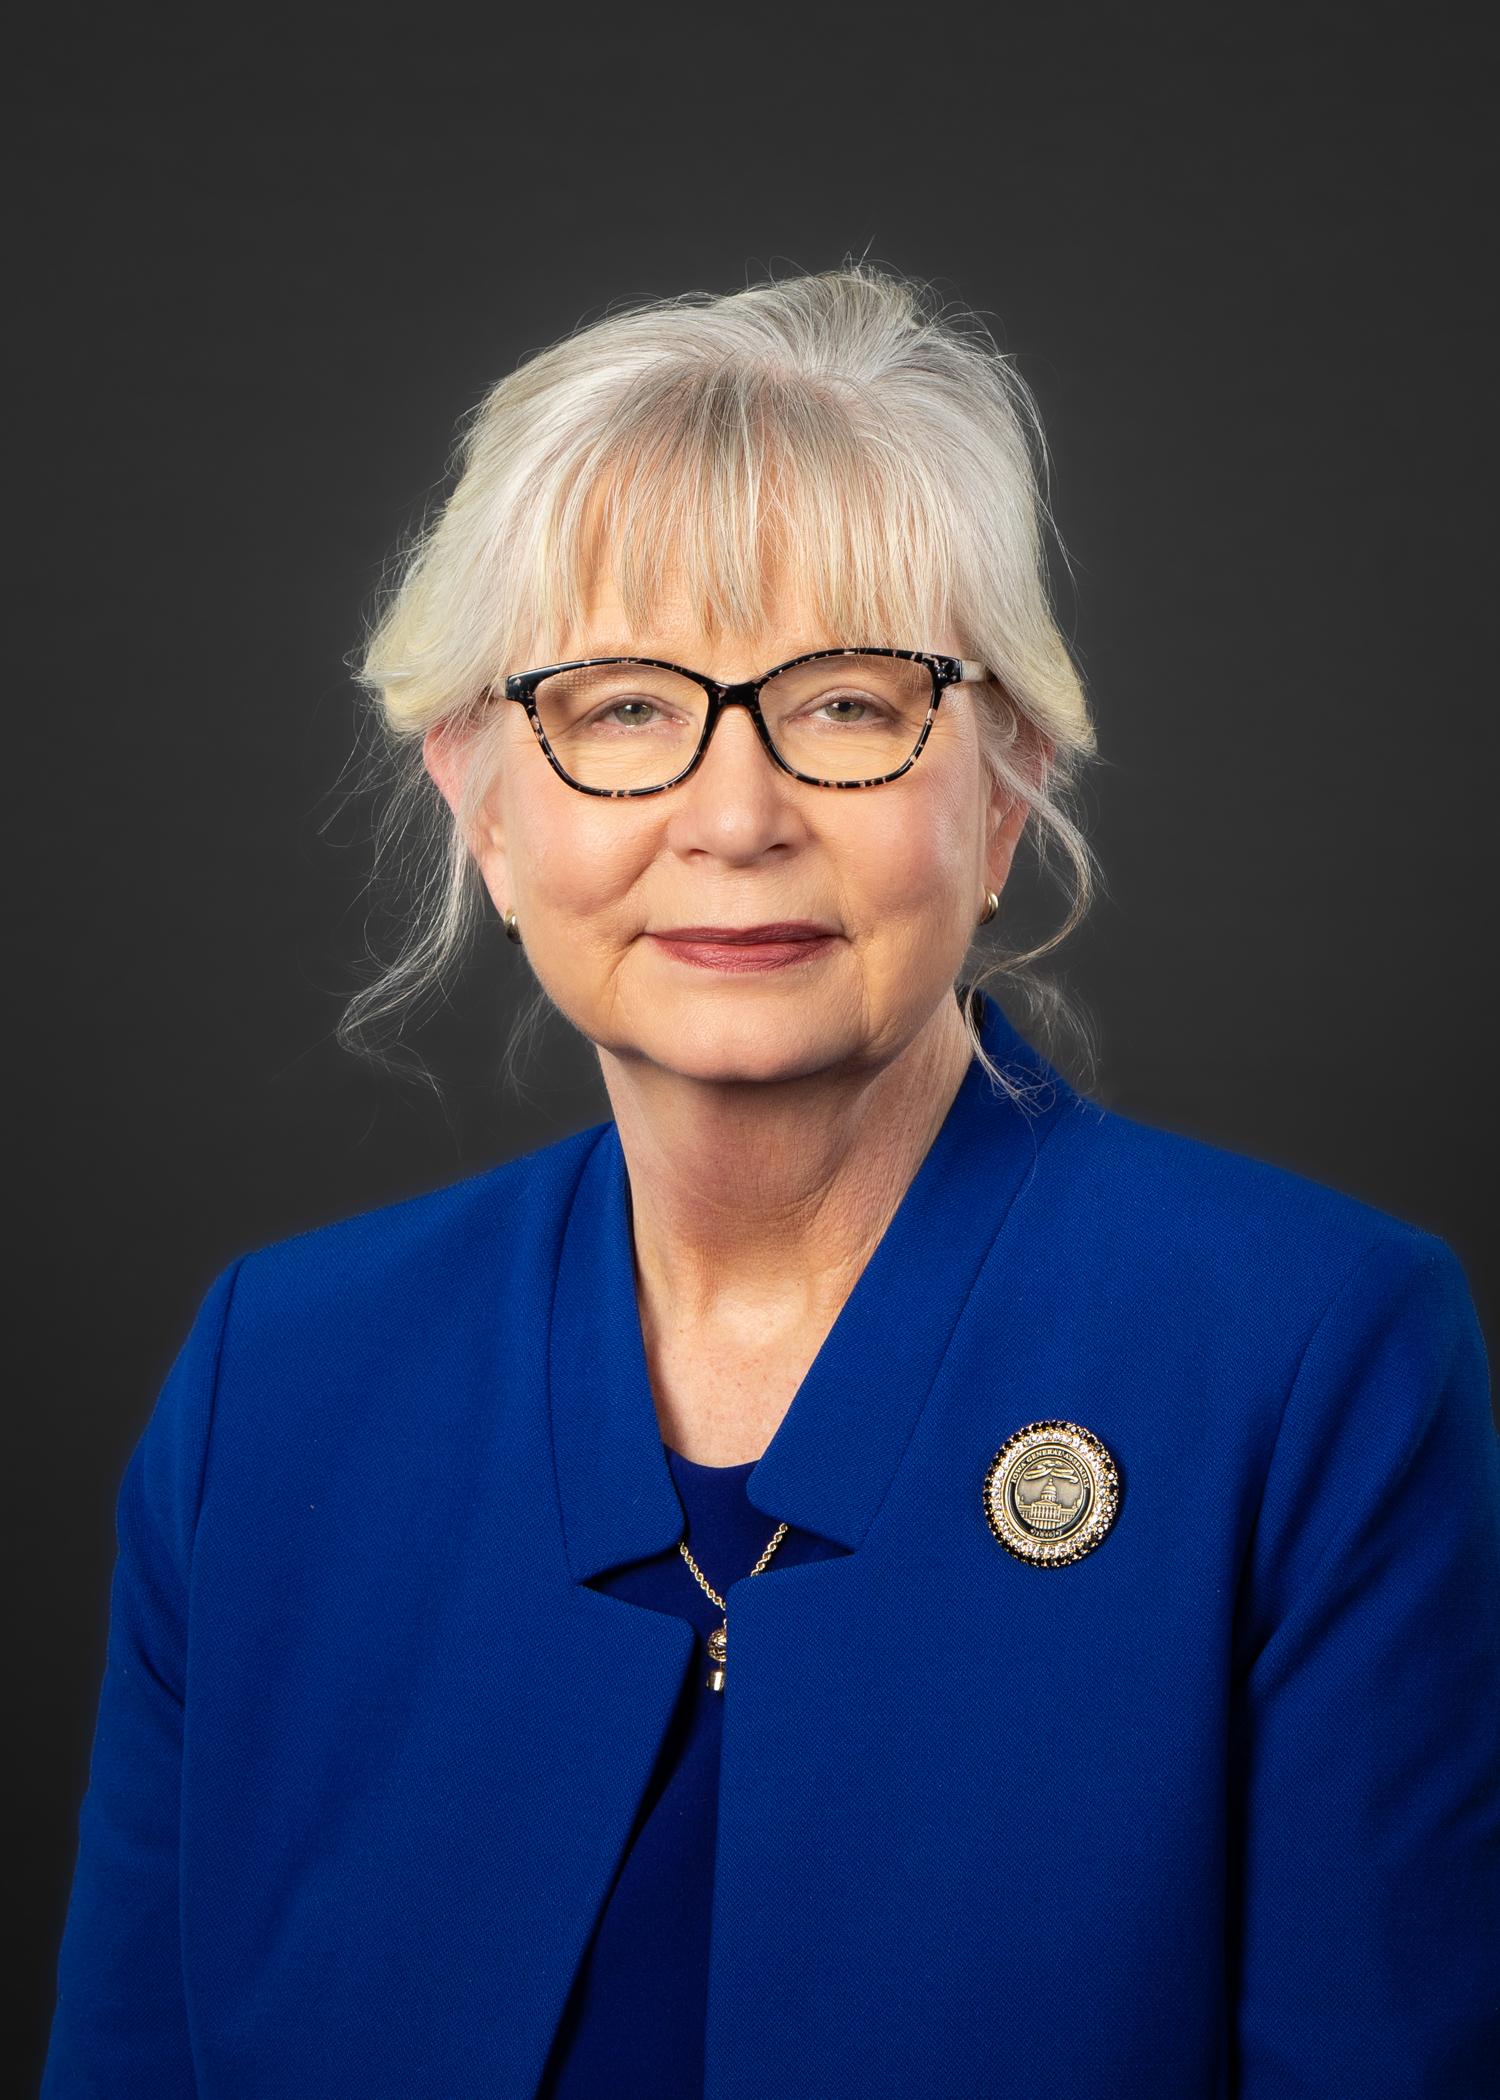  senator Beth Wessel-Kroeschell